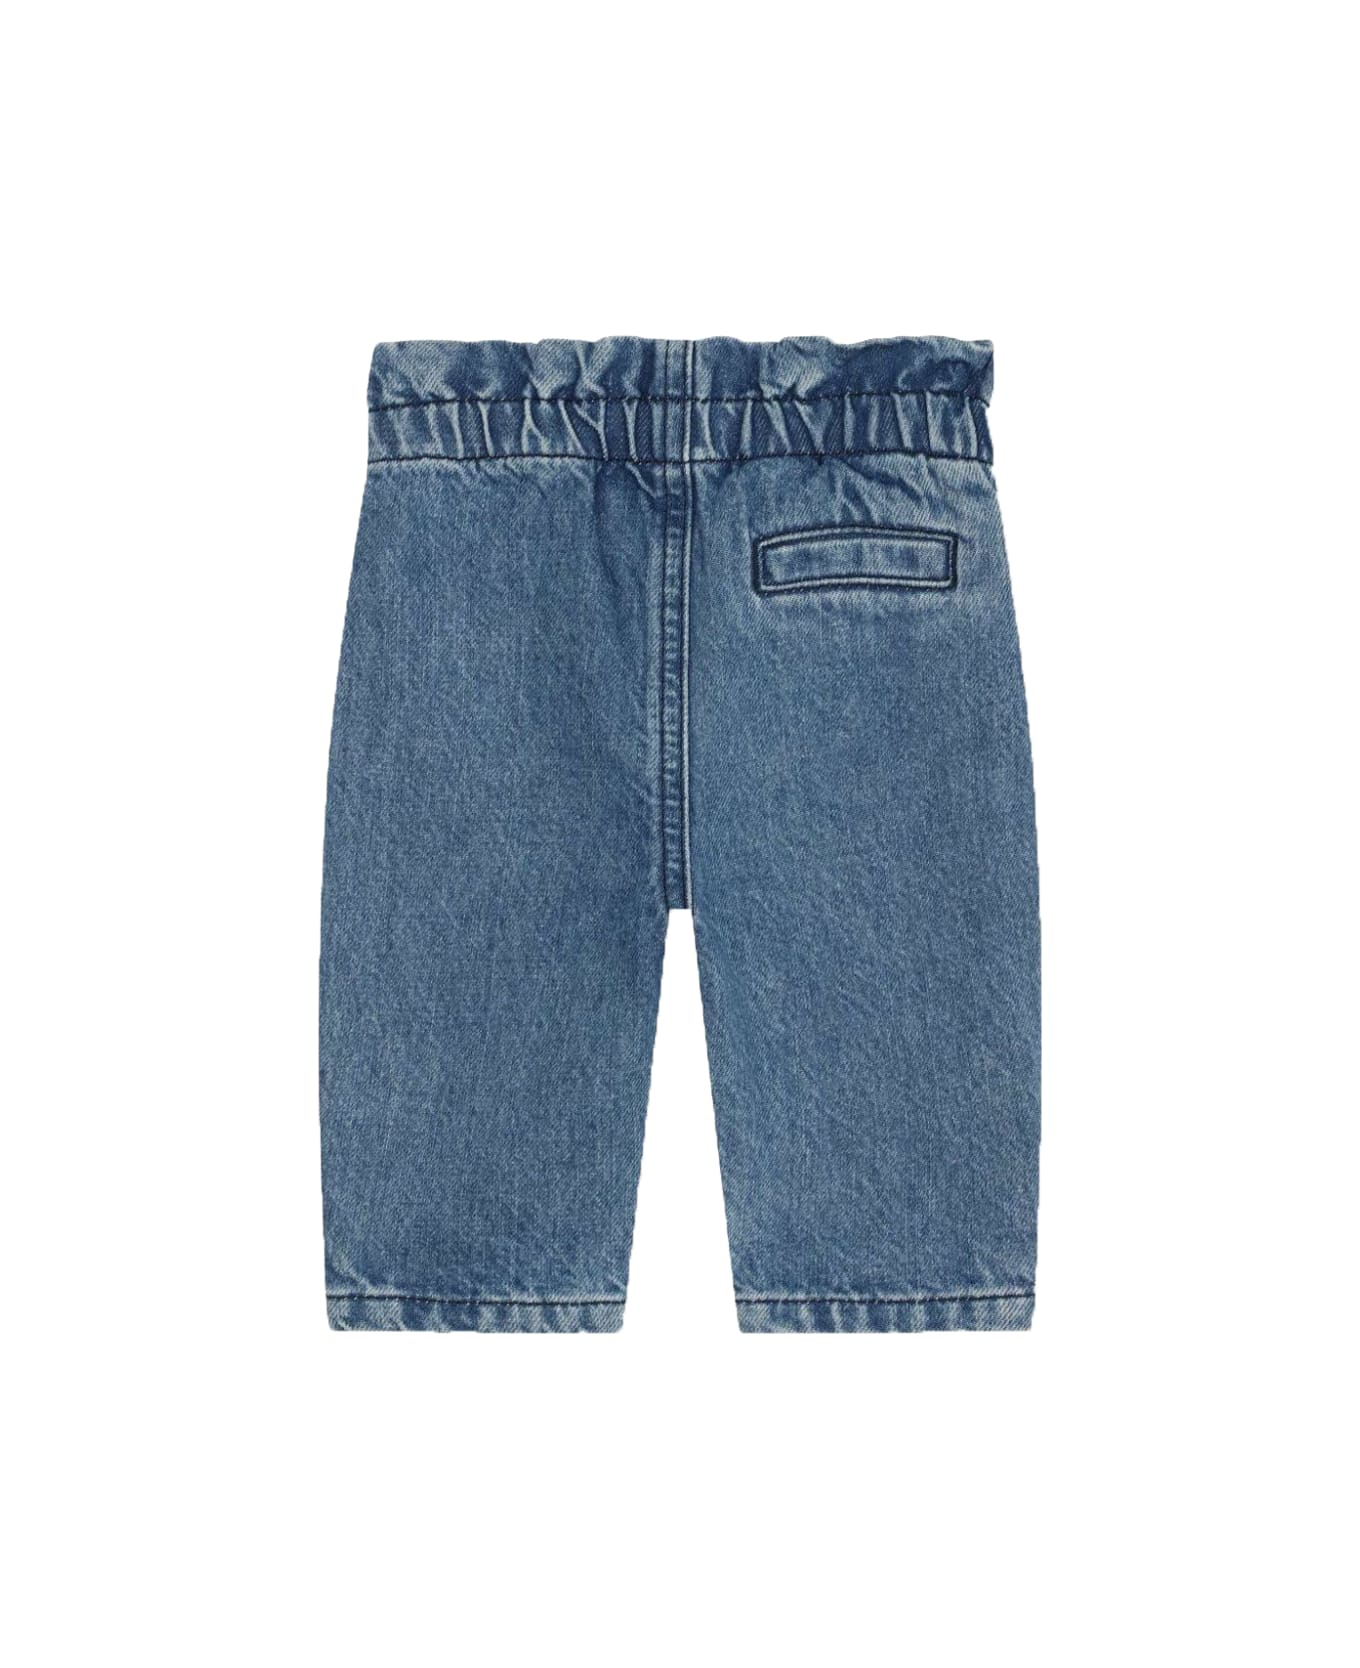 Kenzo Cotton Denim Jeans - Blue